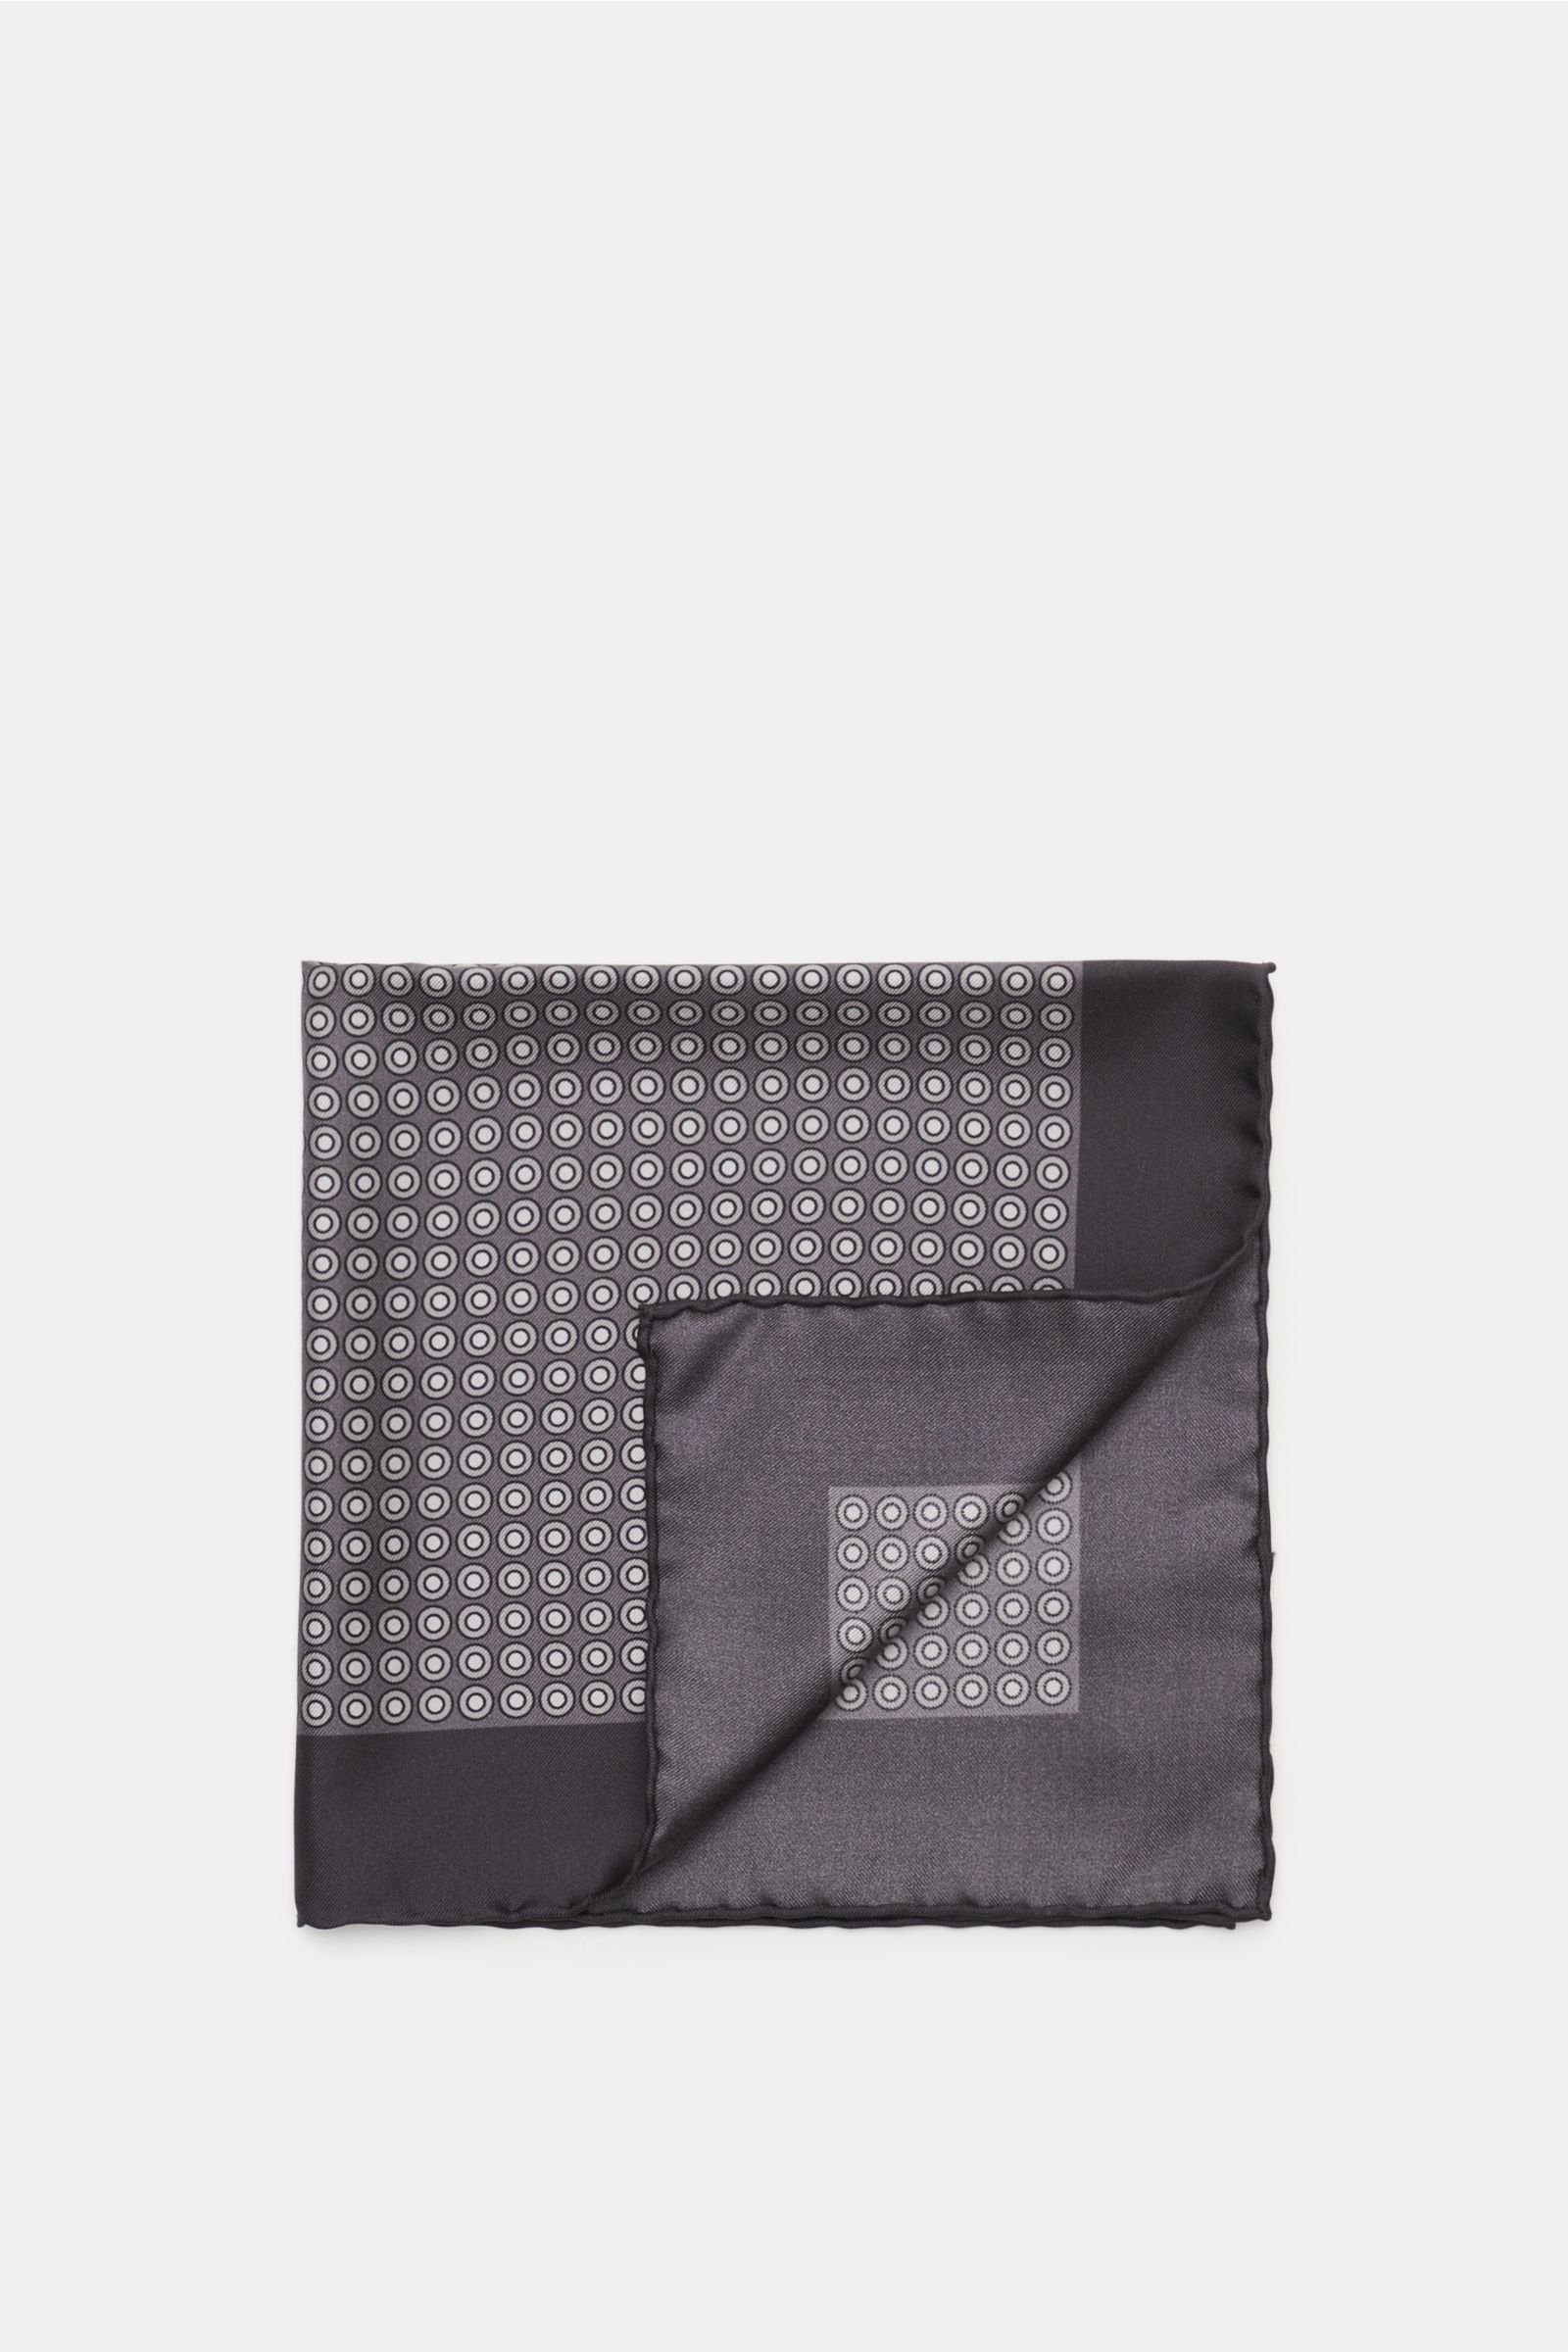 Pocket square dark grey/grey dotted